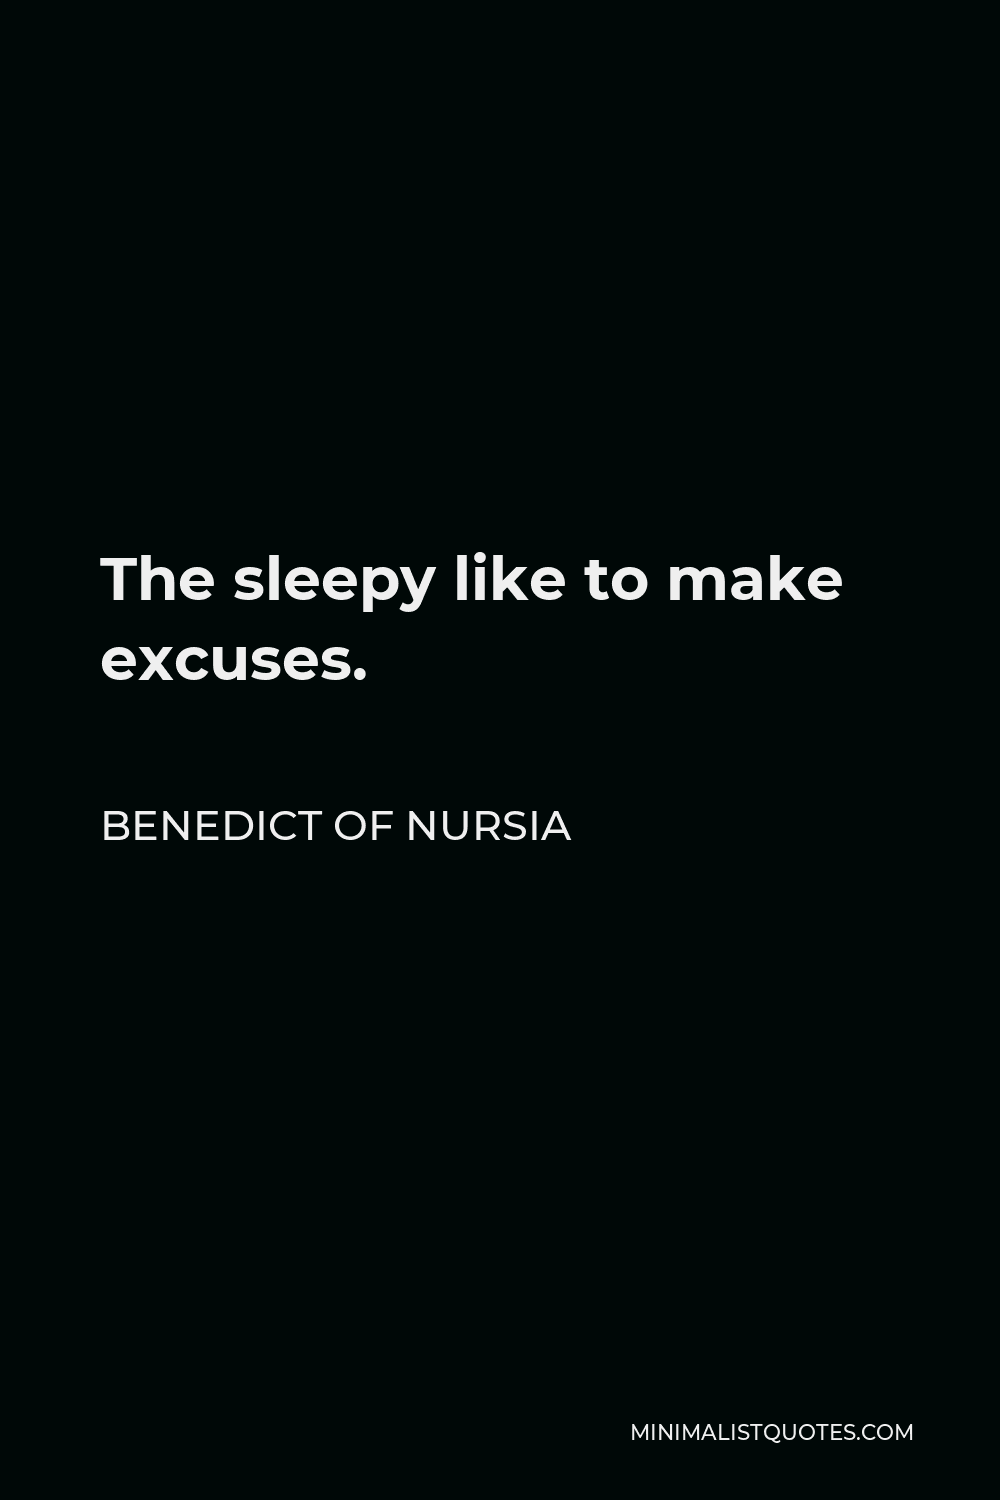 Benedict of Nursia Quote - The sleepy like to make excuses.